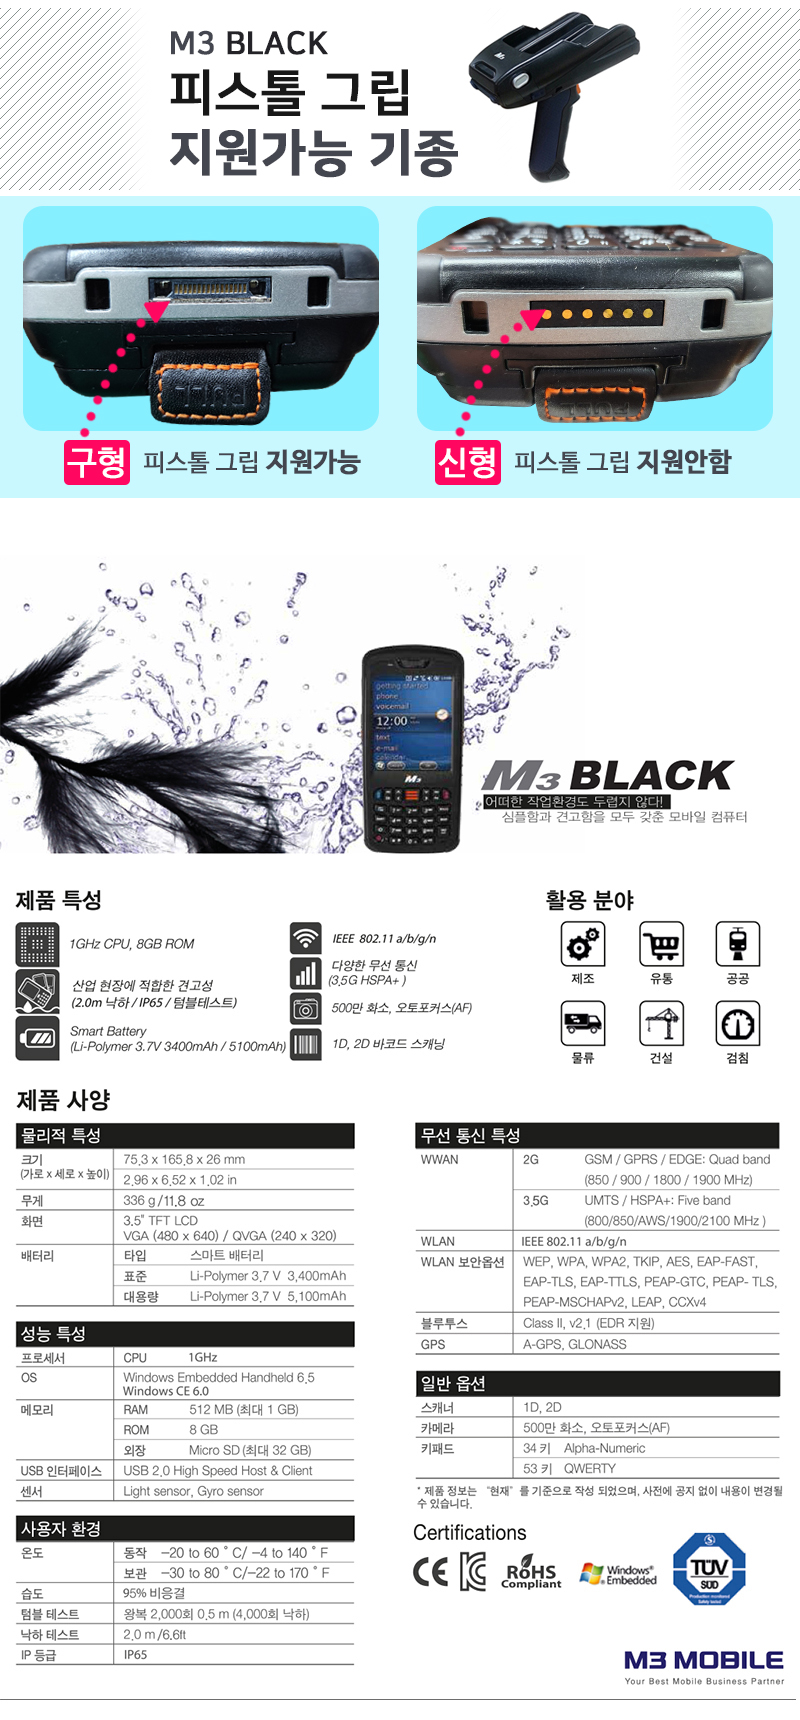 M3-Black_01_104118.jpg